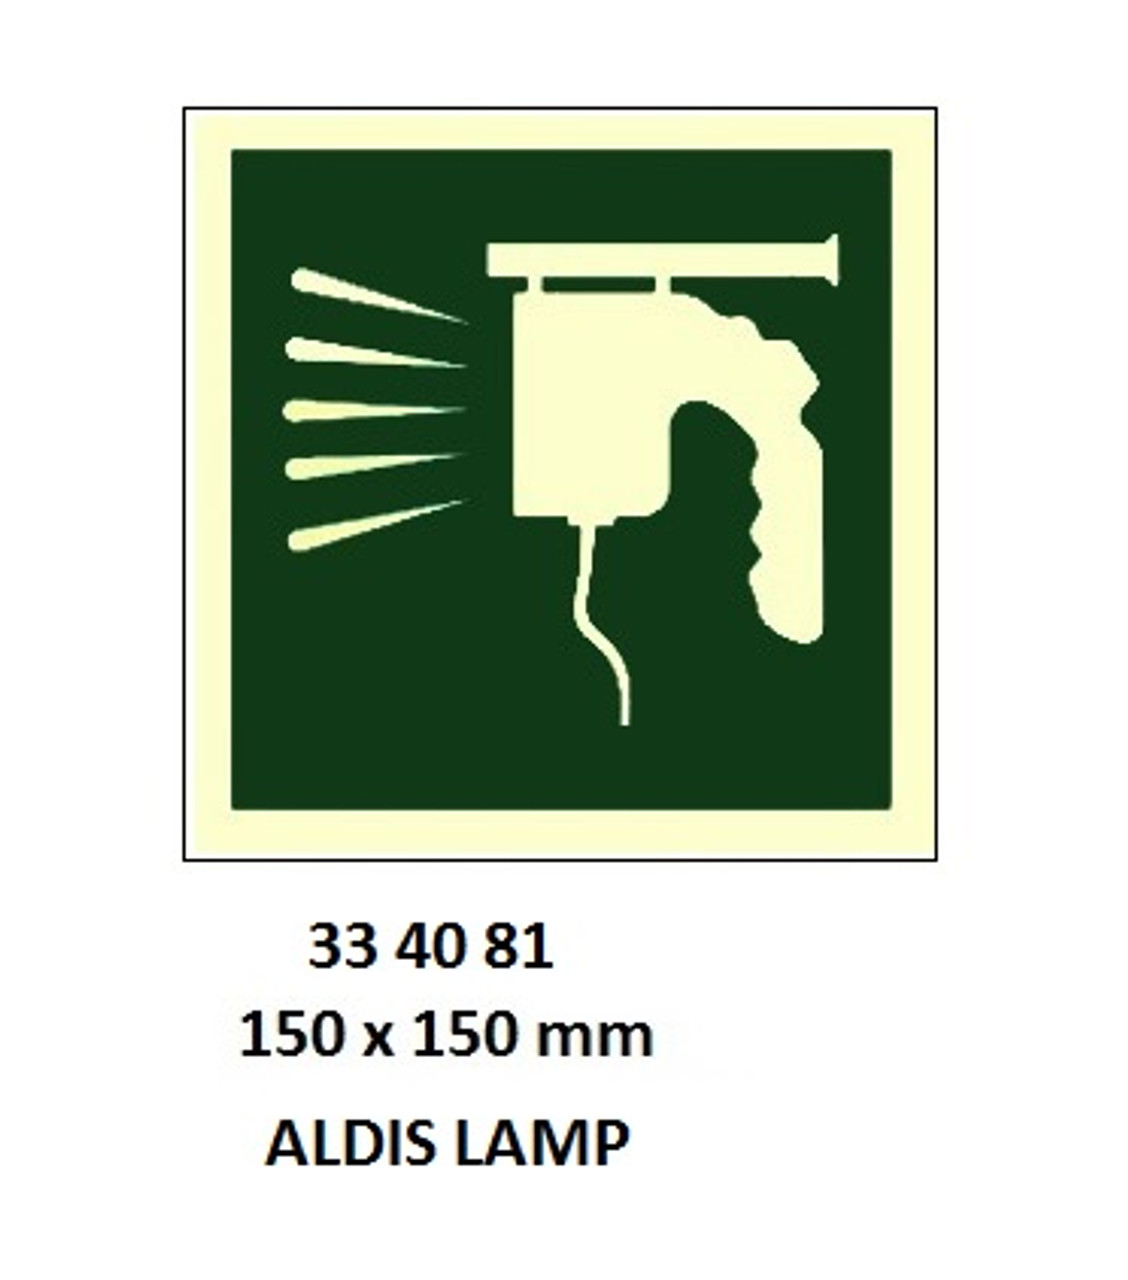 IMPA 334081 Self adhesive safety sign - Sign daylight signalling lamp